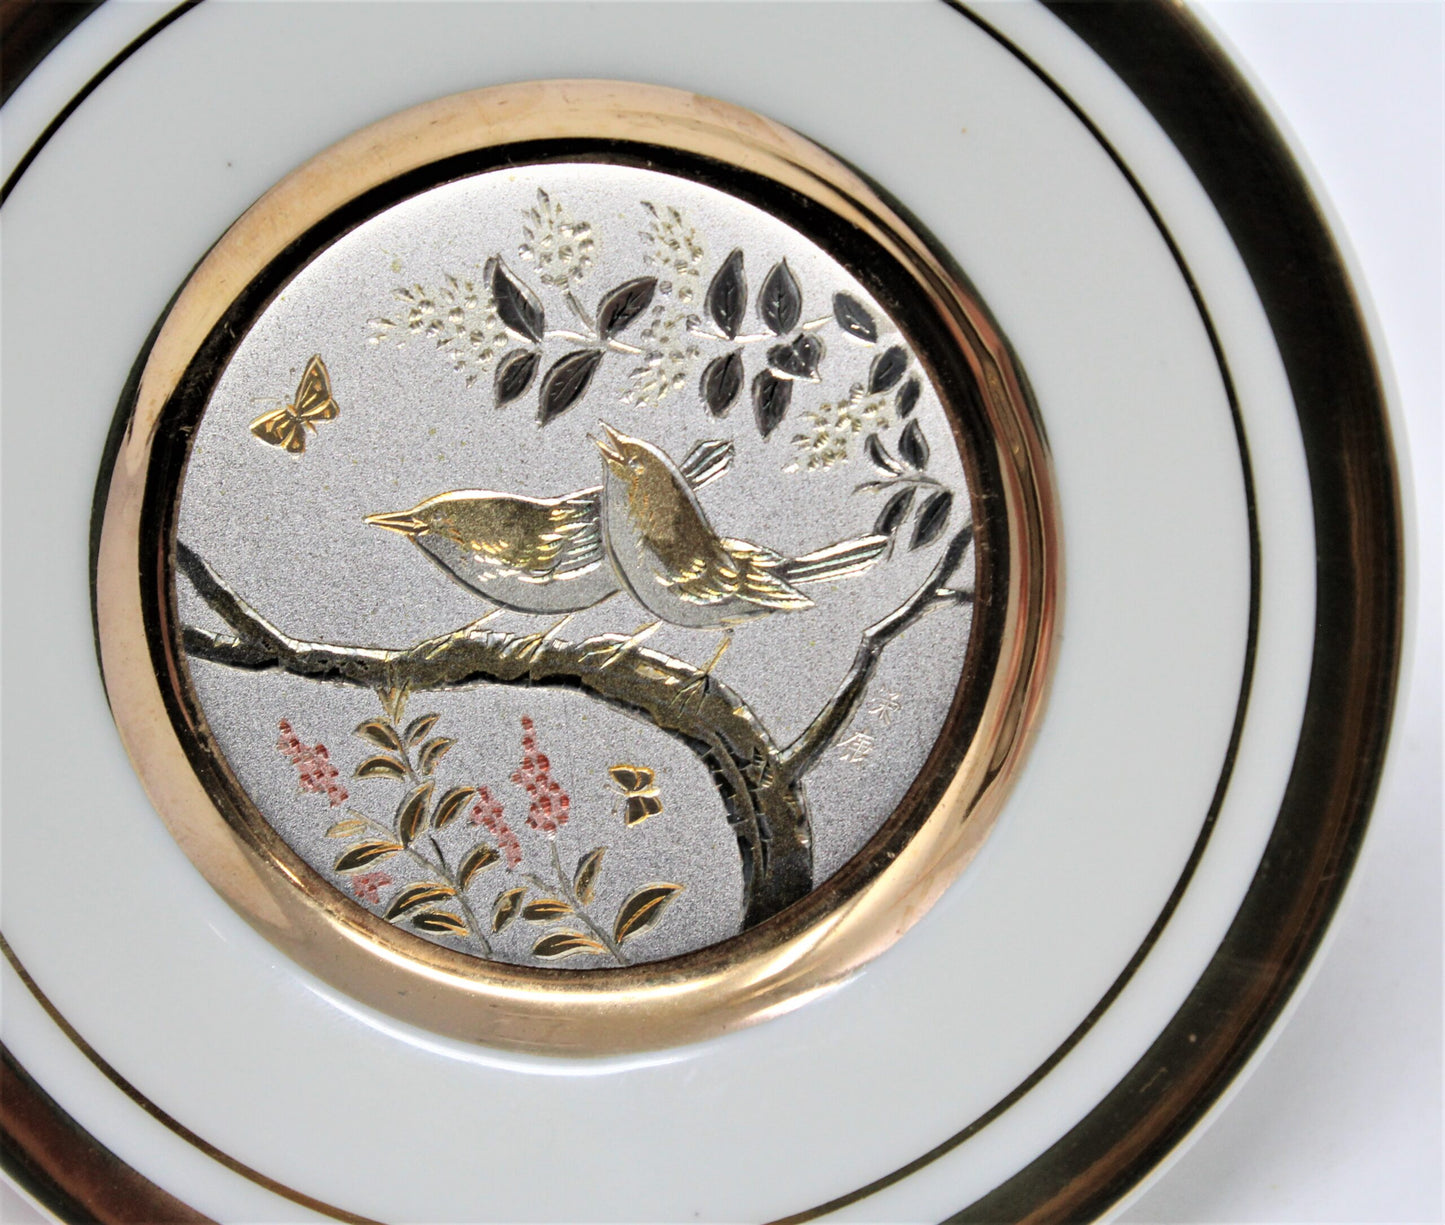 Decorative Plate, Chokin Art, Birds, 24KT Gold, Japan, Vintage